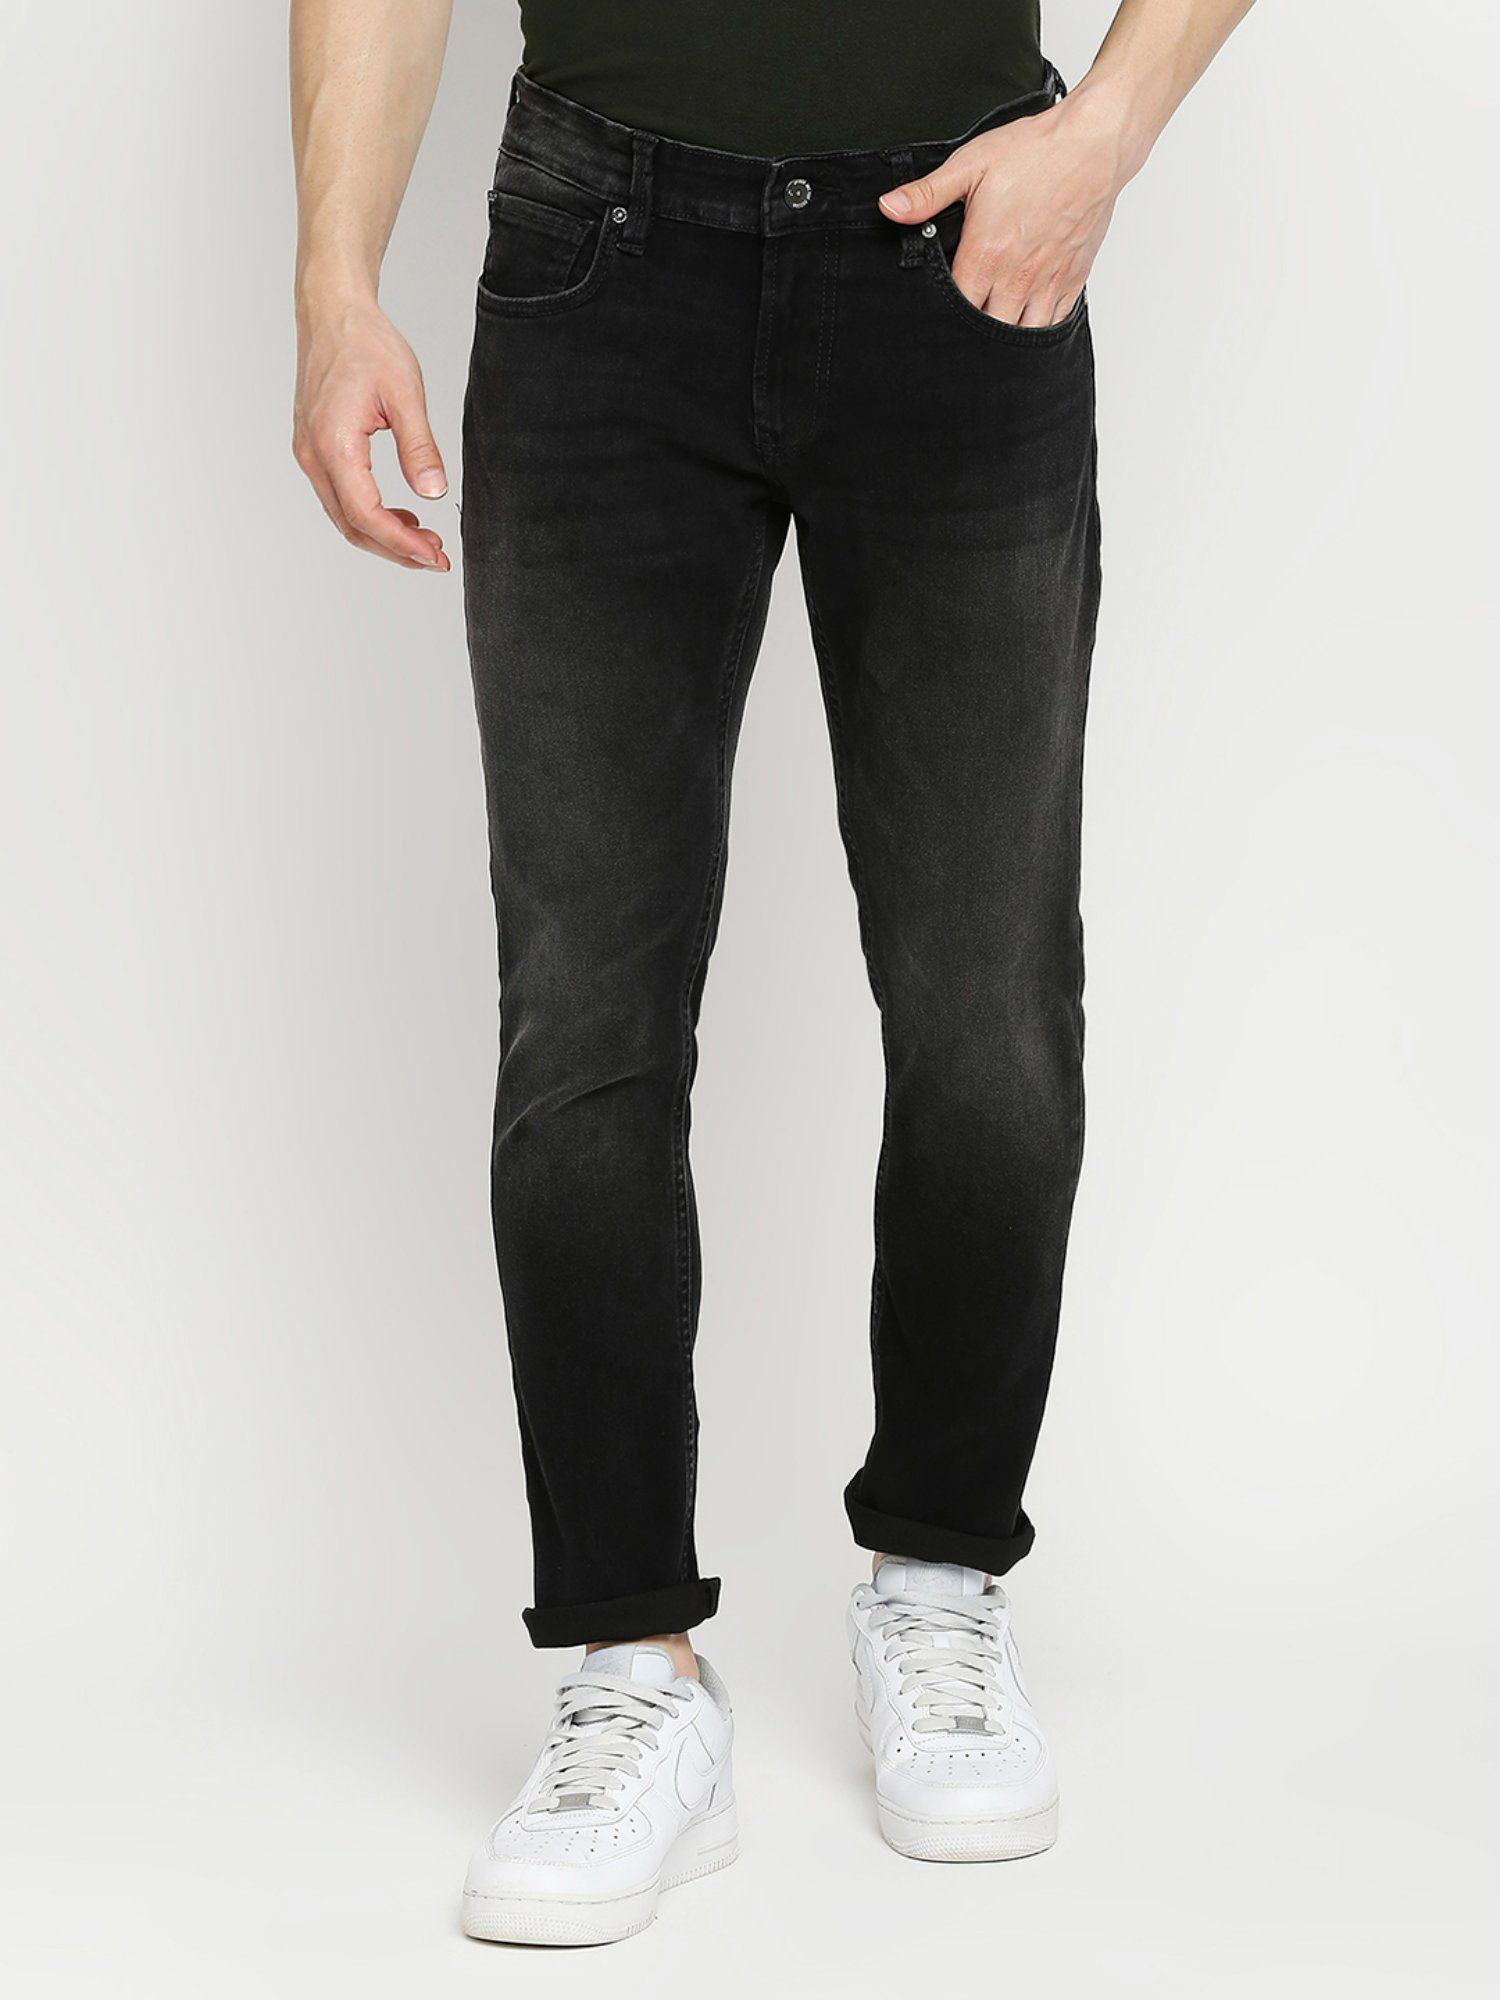 Charcoal Black Cotton Slim Fit Narrow Length Jeans for Men (Skinny)